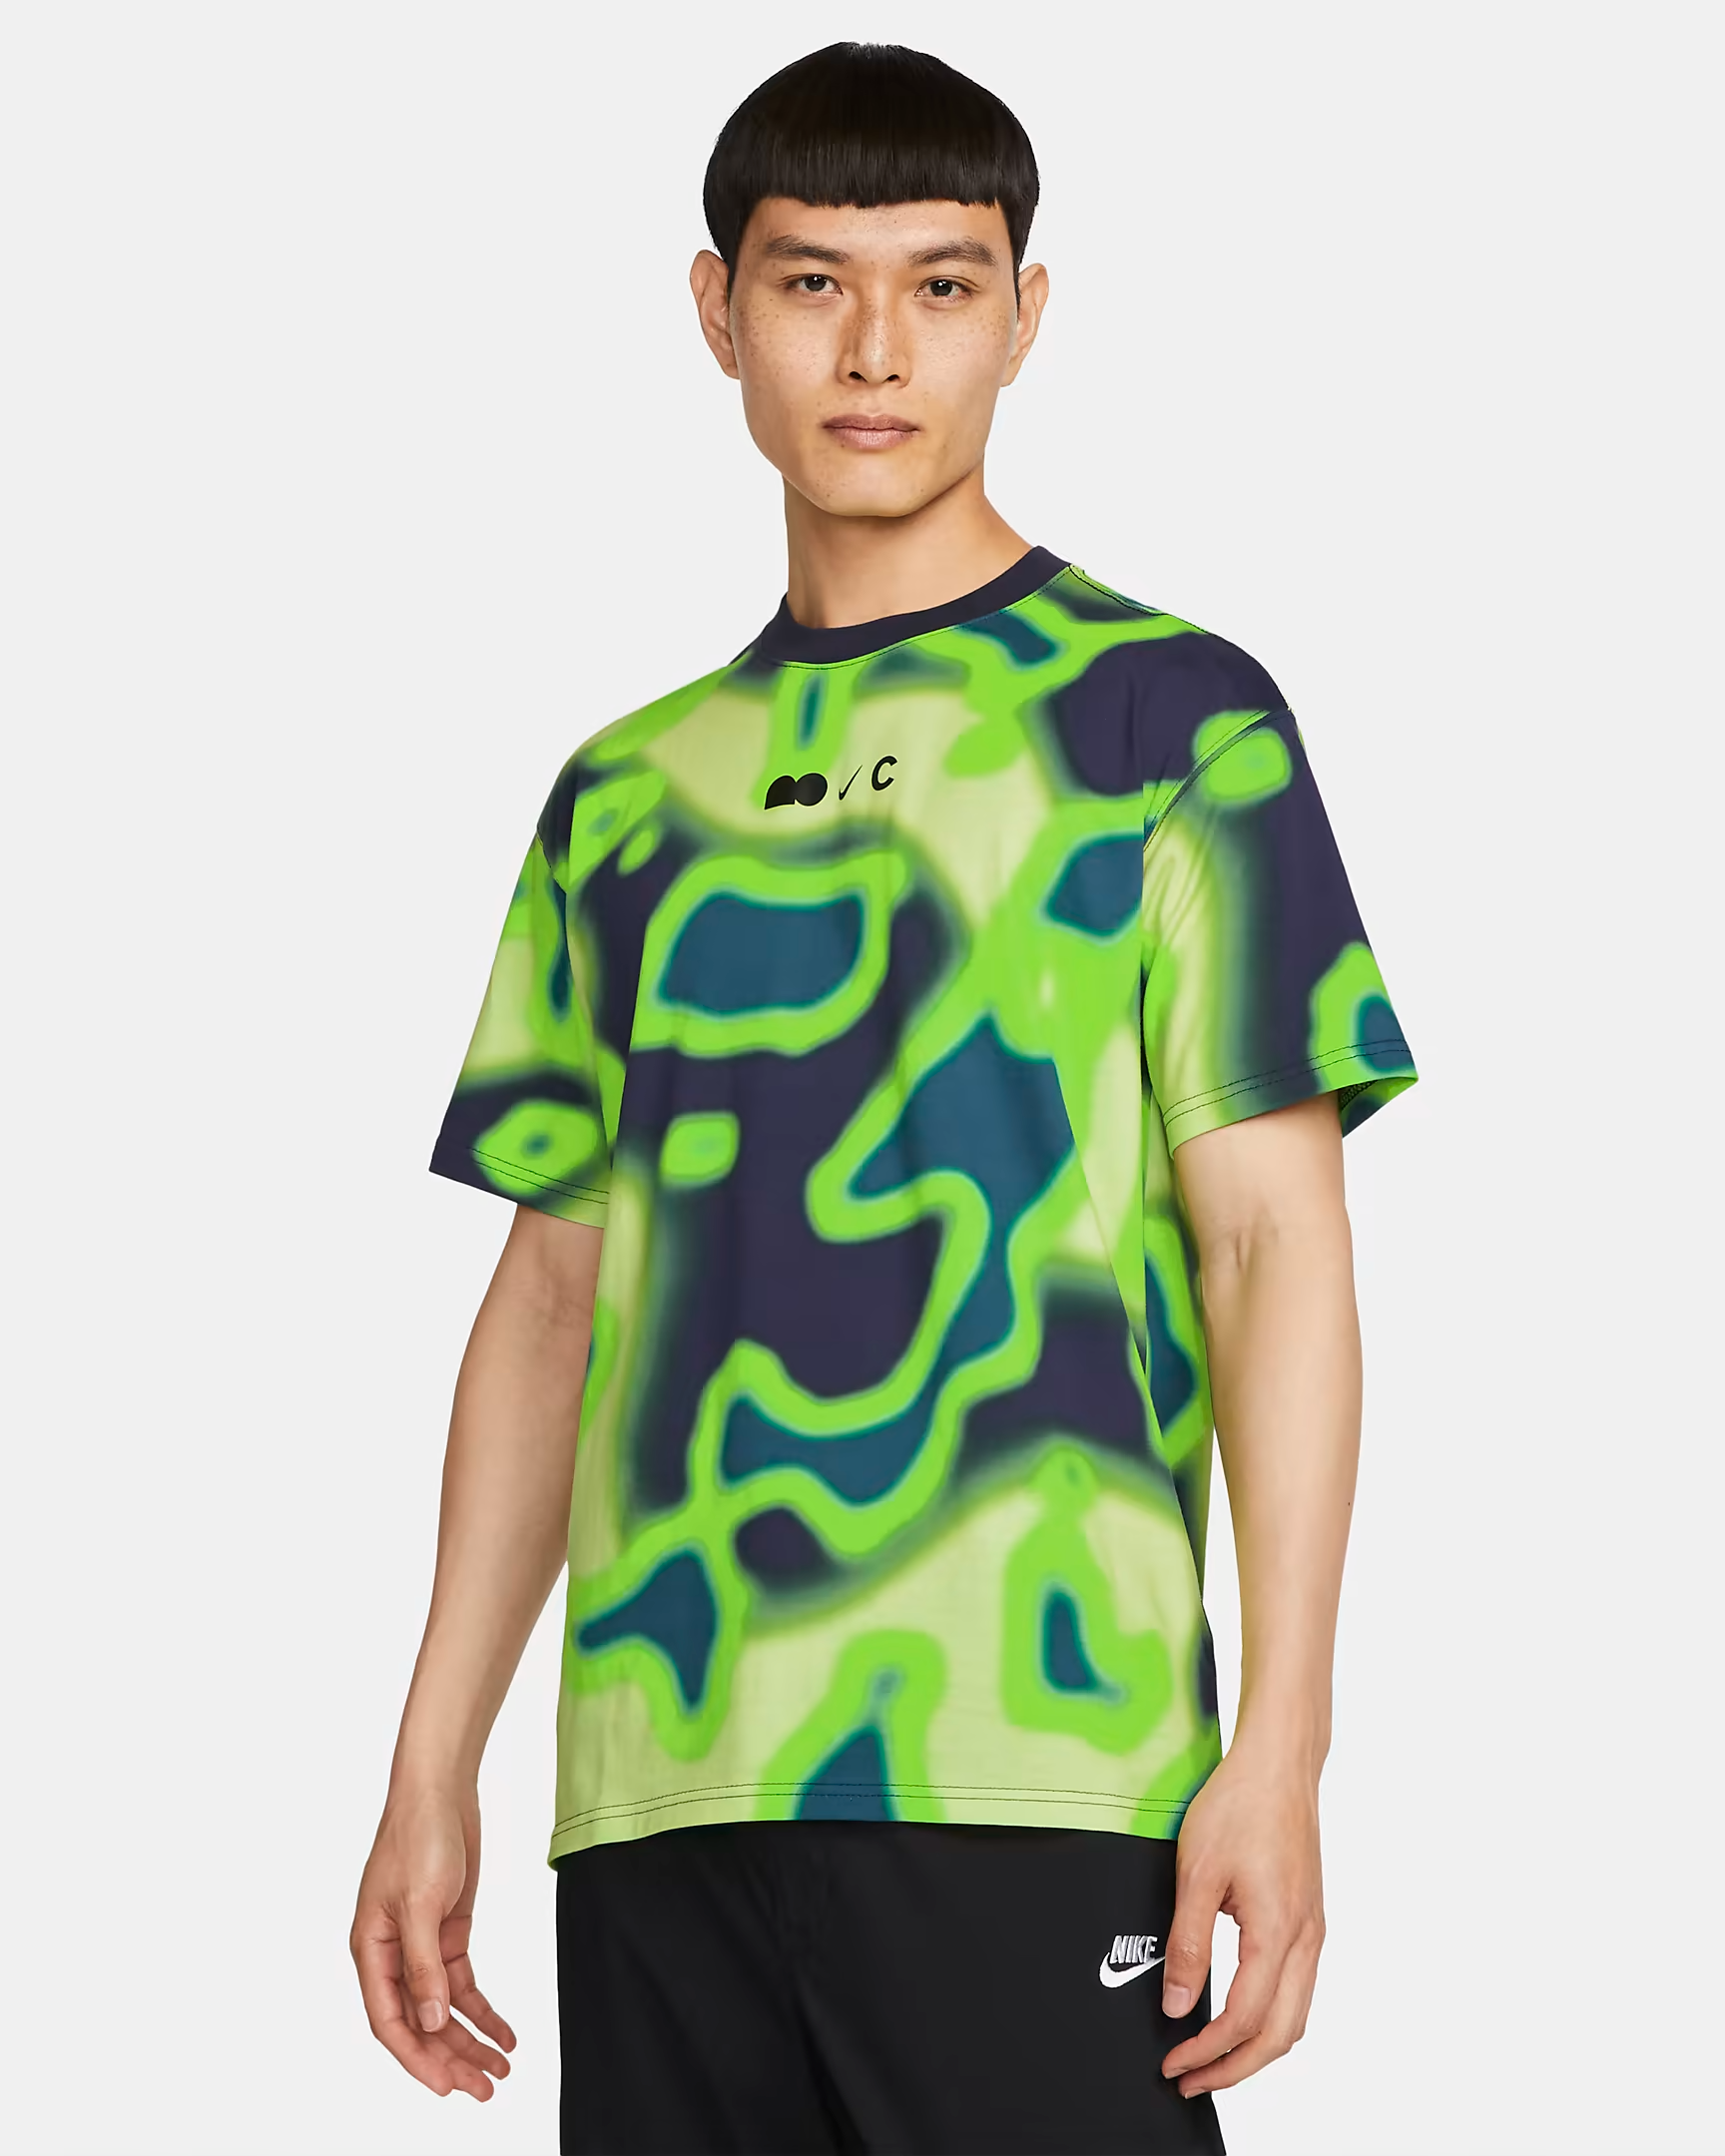 Nike Men's Naomi Osaka Collection Printed Tennis T-Shirt